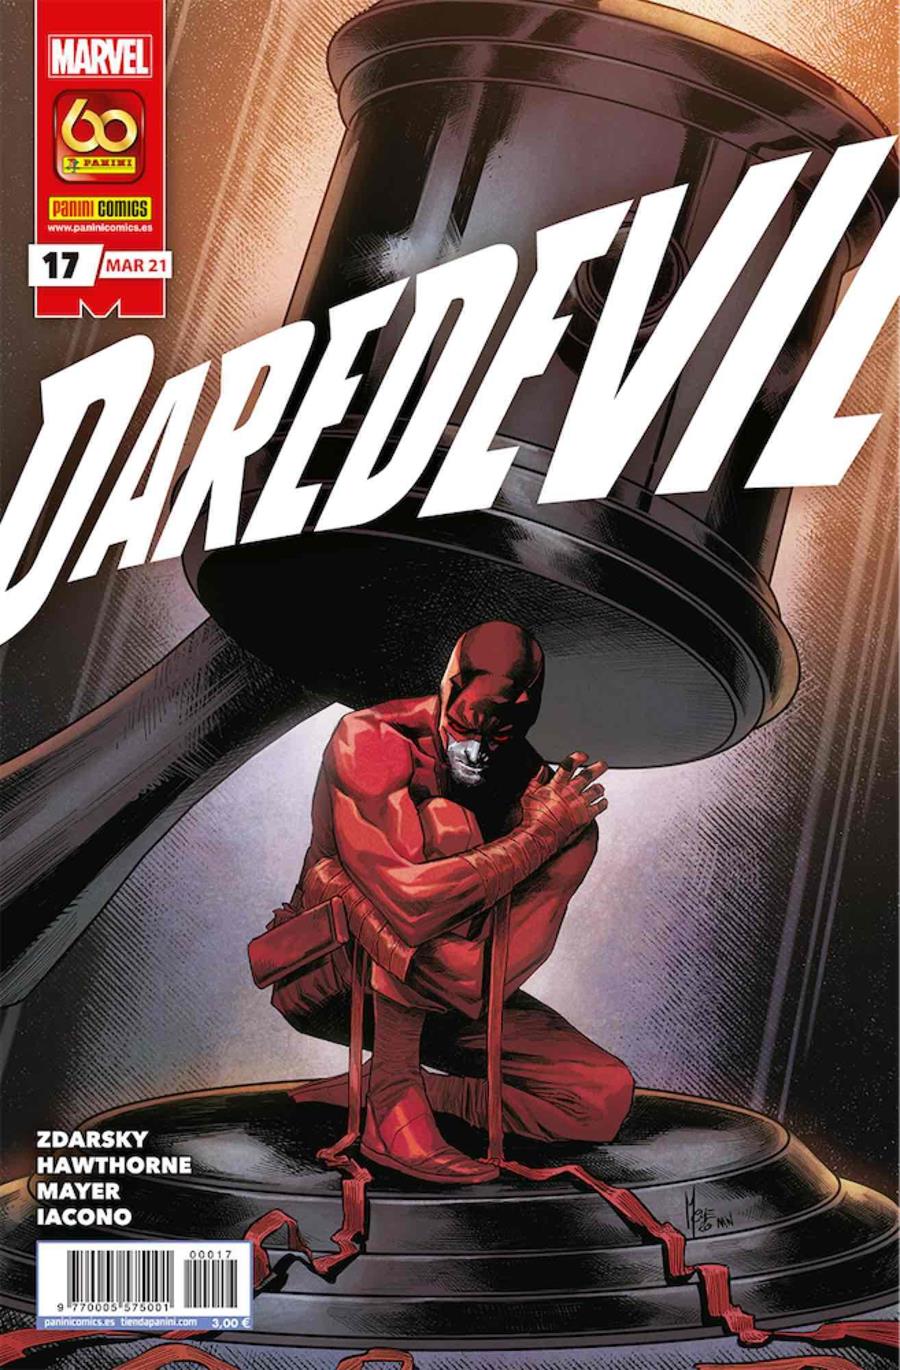 Daredevil 17 | N0321-PAN09 | Chip Zdarsky, Mike Hawthorne | Terra de Còmic - Tu tienda de cómics online especializada en cómics, manga y merchandising